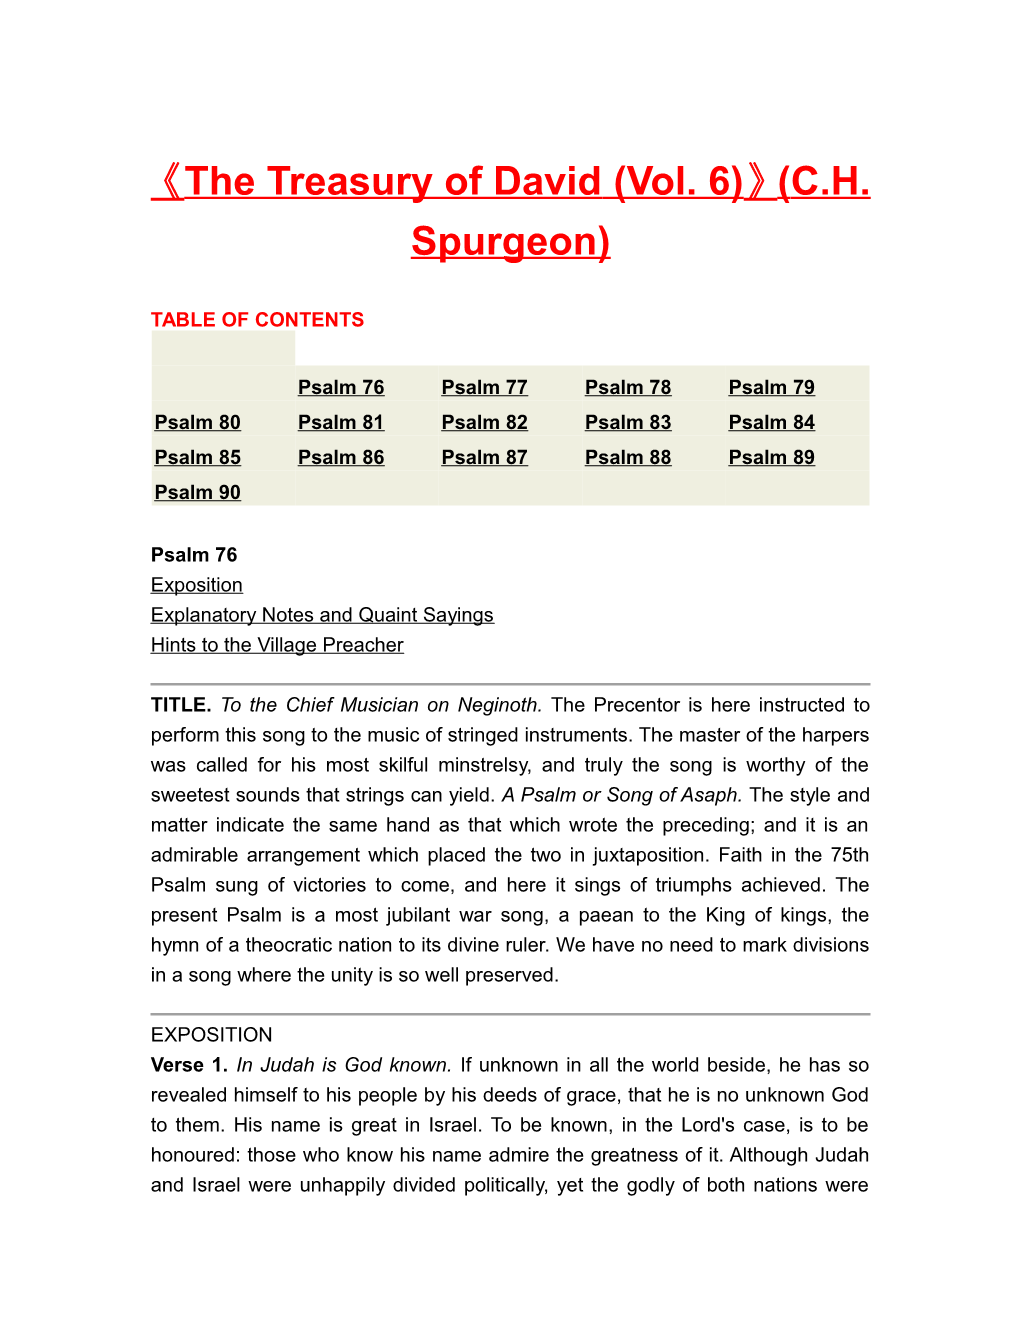 The Treasury of David (Vol. 6) (C.H. Spurgeon)